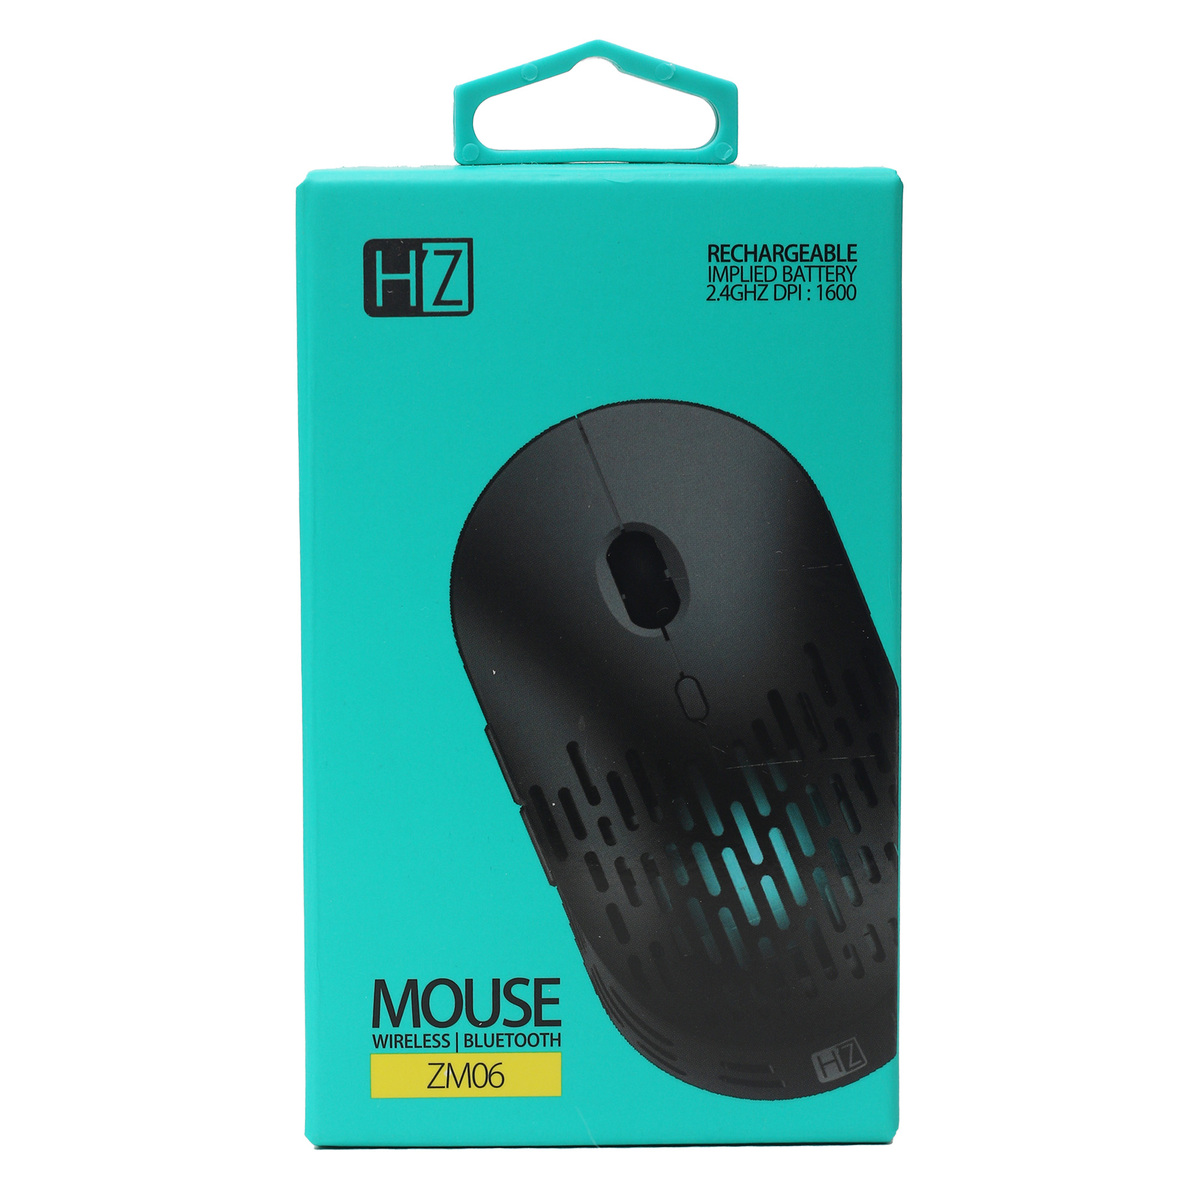 Heatz Rechargeable Wireless Mouse ZM06 Black